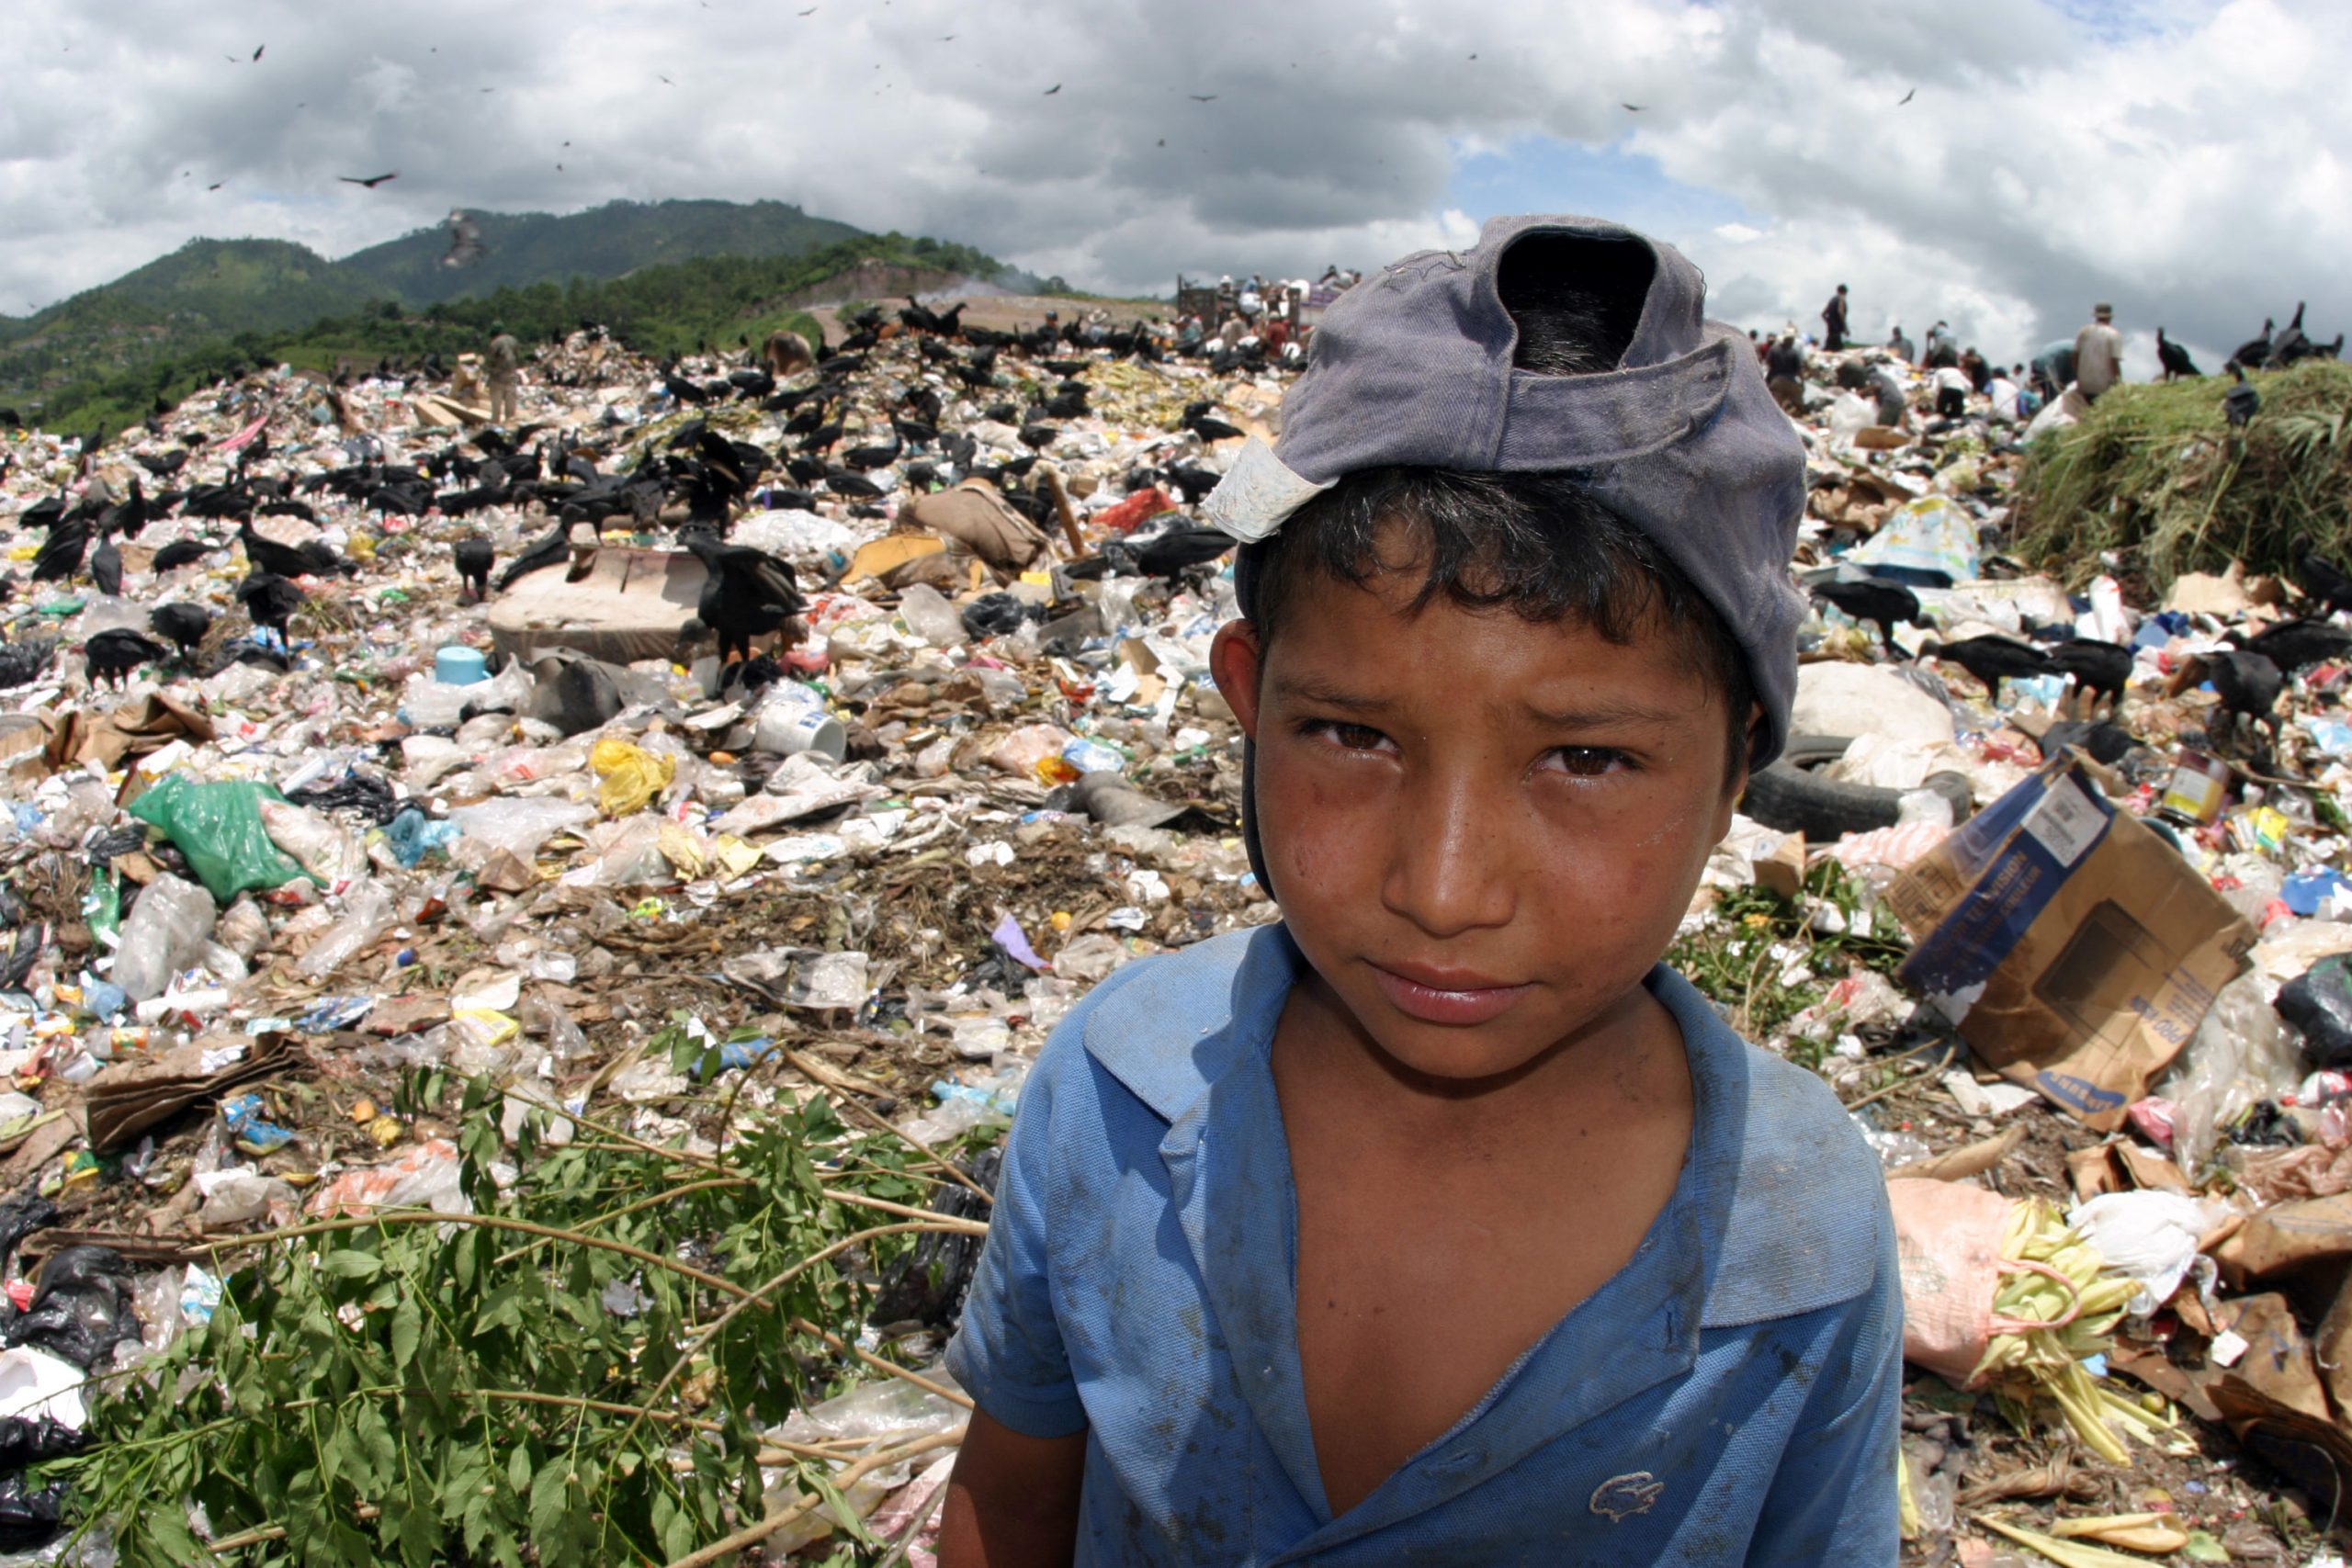 Child Poverty in Latin America - Honduras